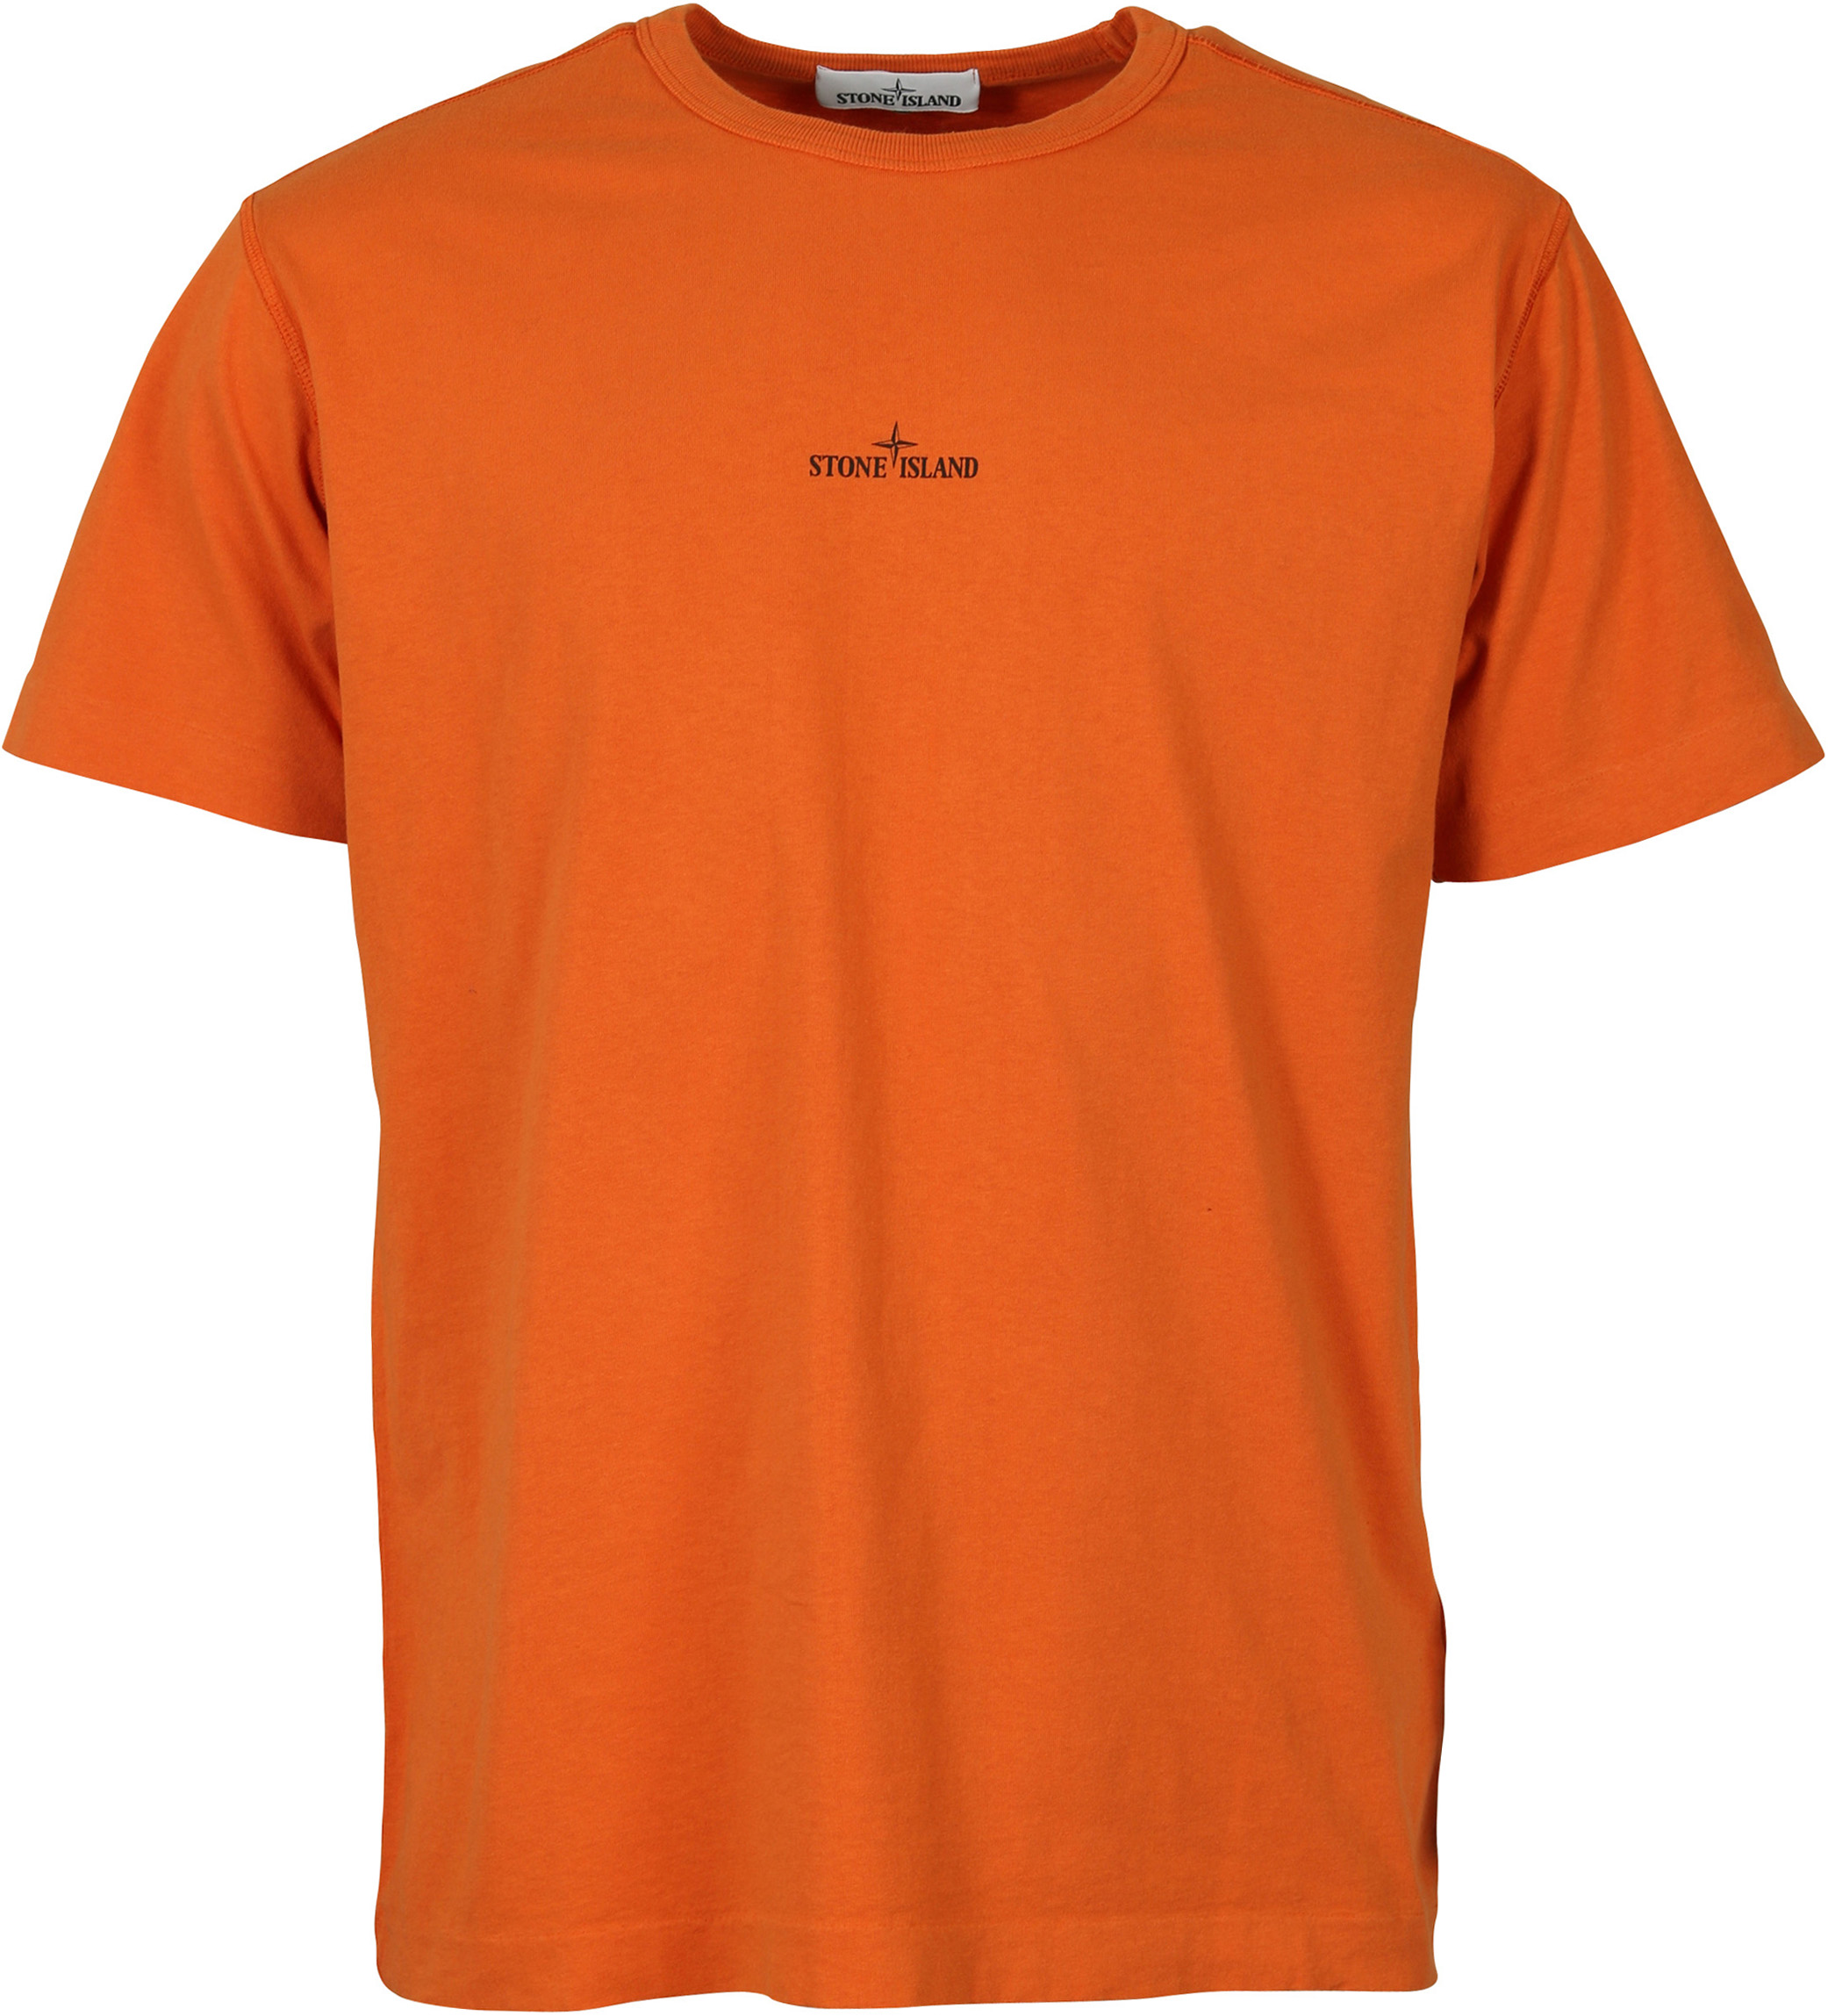 Stone Island T-Shirt Orange Printed L